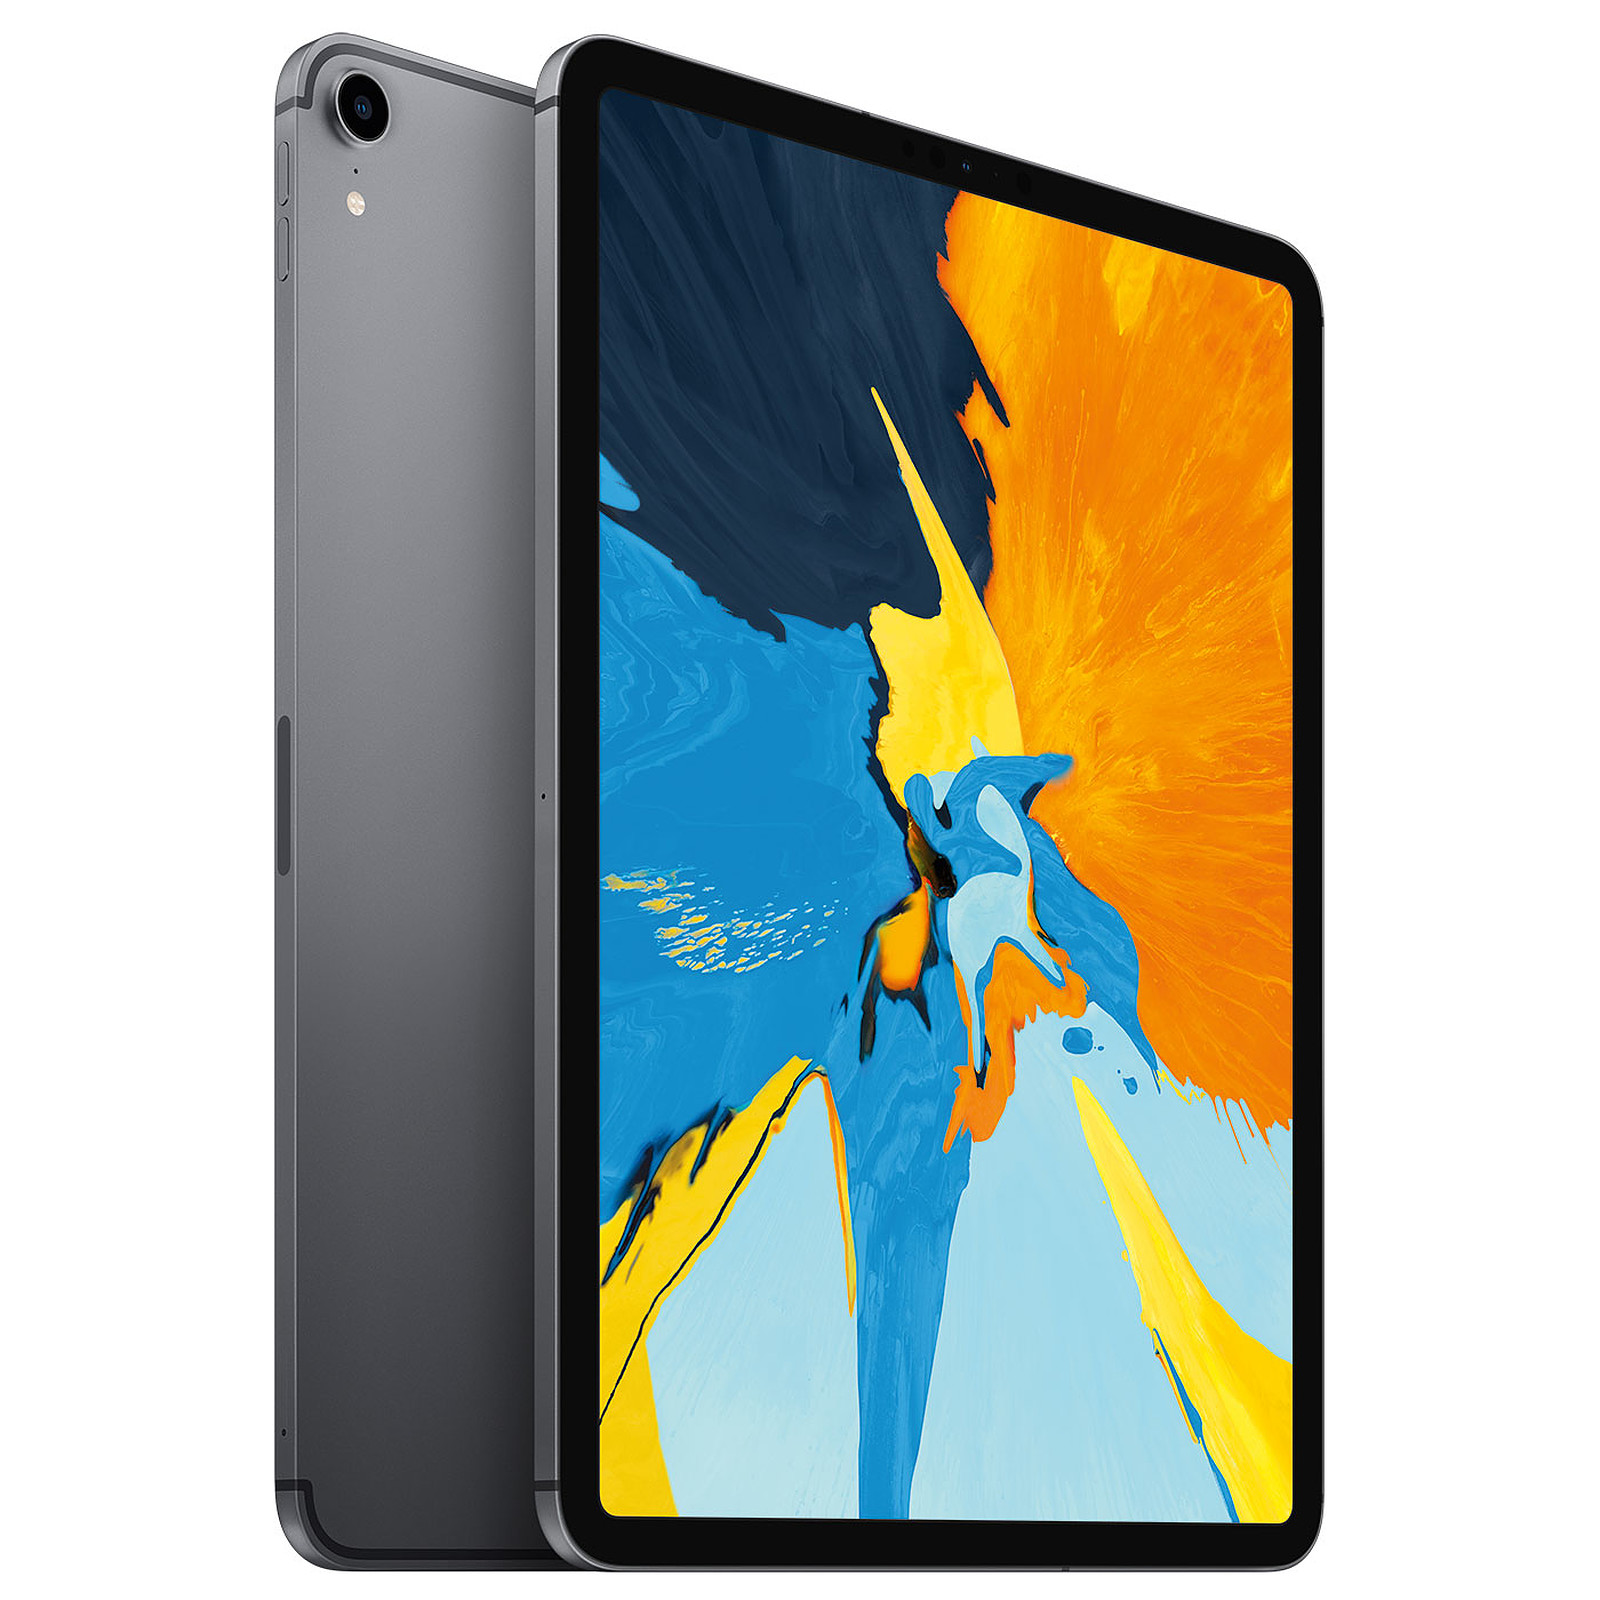 Apple iPad Pro (2018) 11 pouces 64 Go Wi-Fi + Cellular Gris Sideral · Reconditionne - Tablette tactile Apple